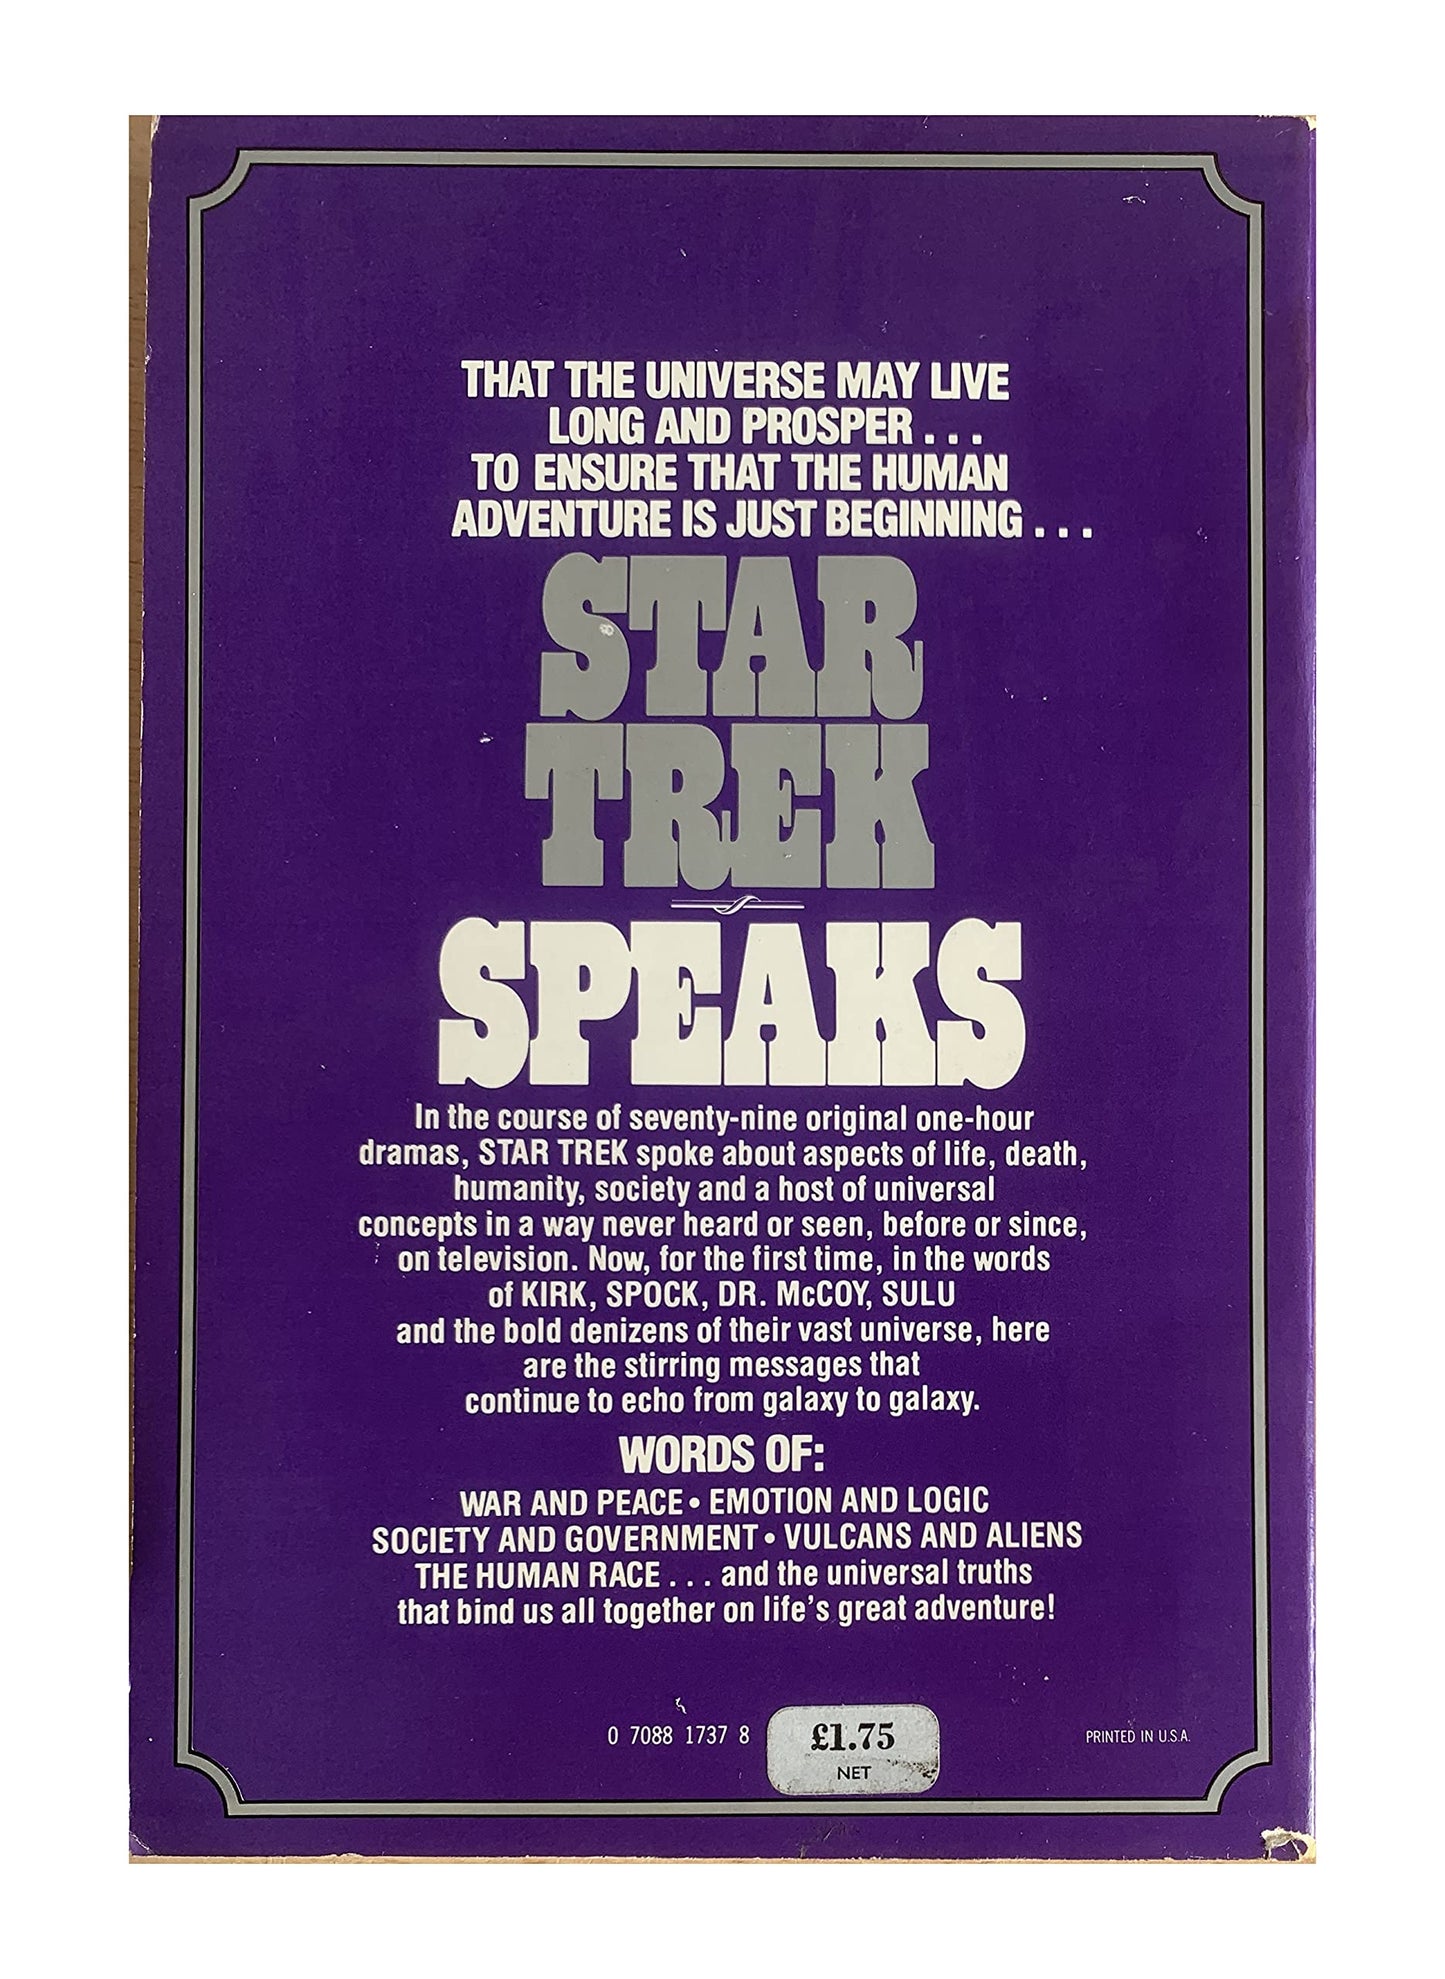 Vintage 1979 Star Trek Speaks - Large Paperback Book by Susan Sackett, Fred Goldstein and Stan Goldstein